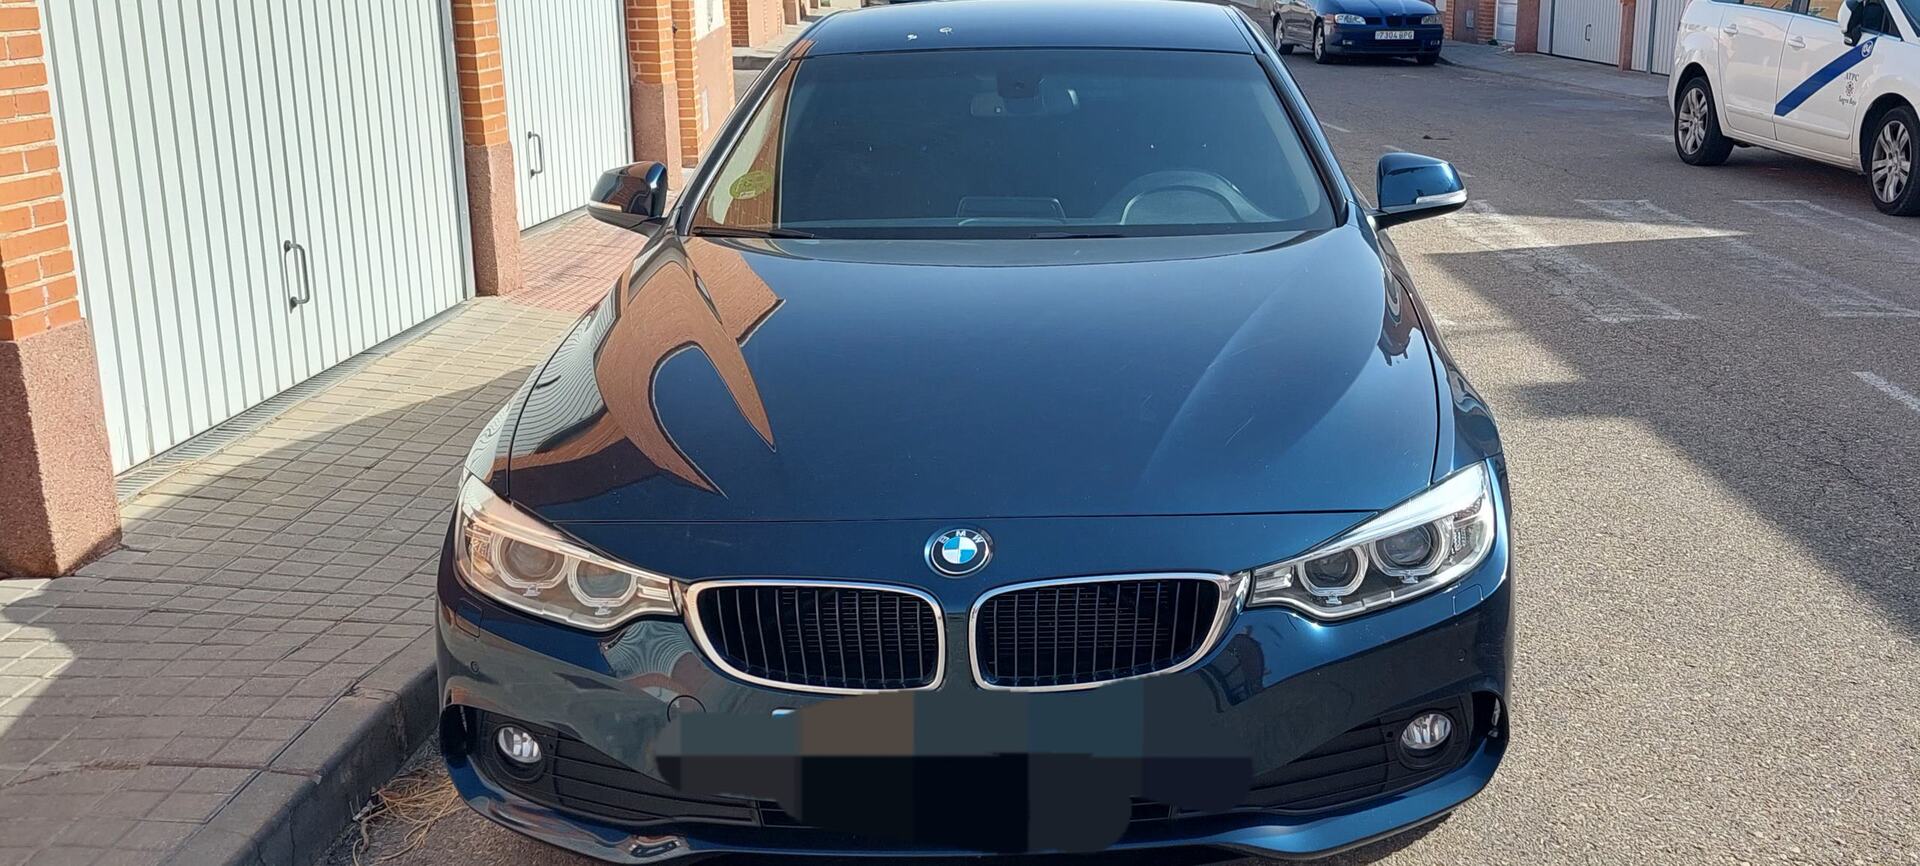 BMW de color oscuro